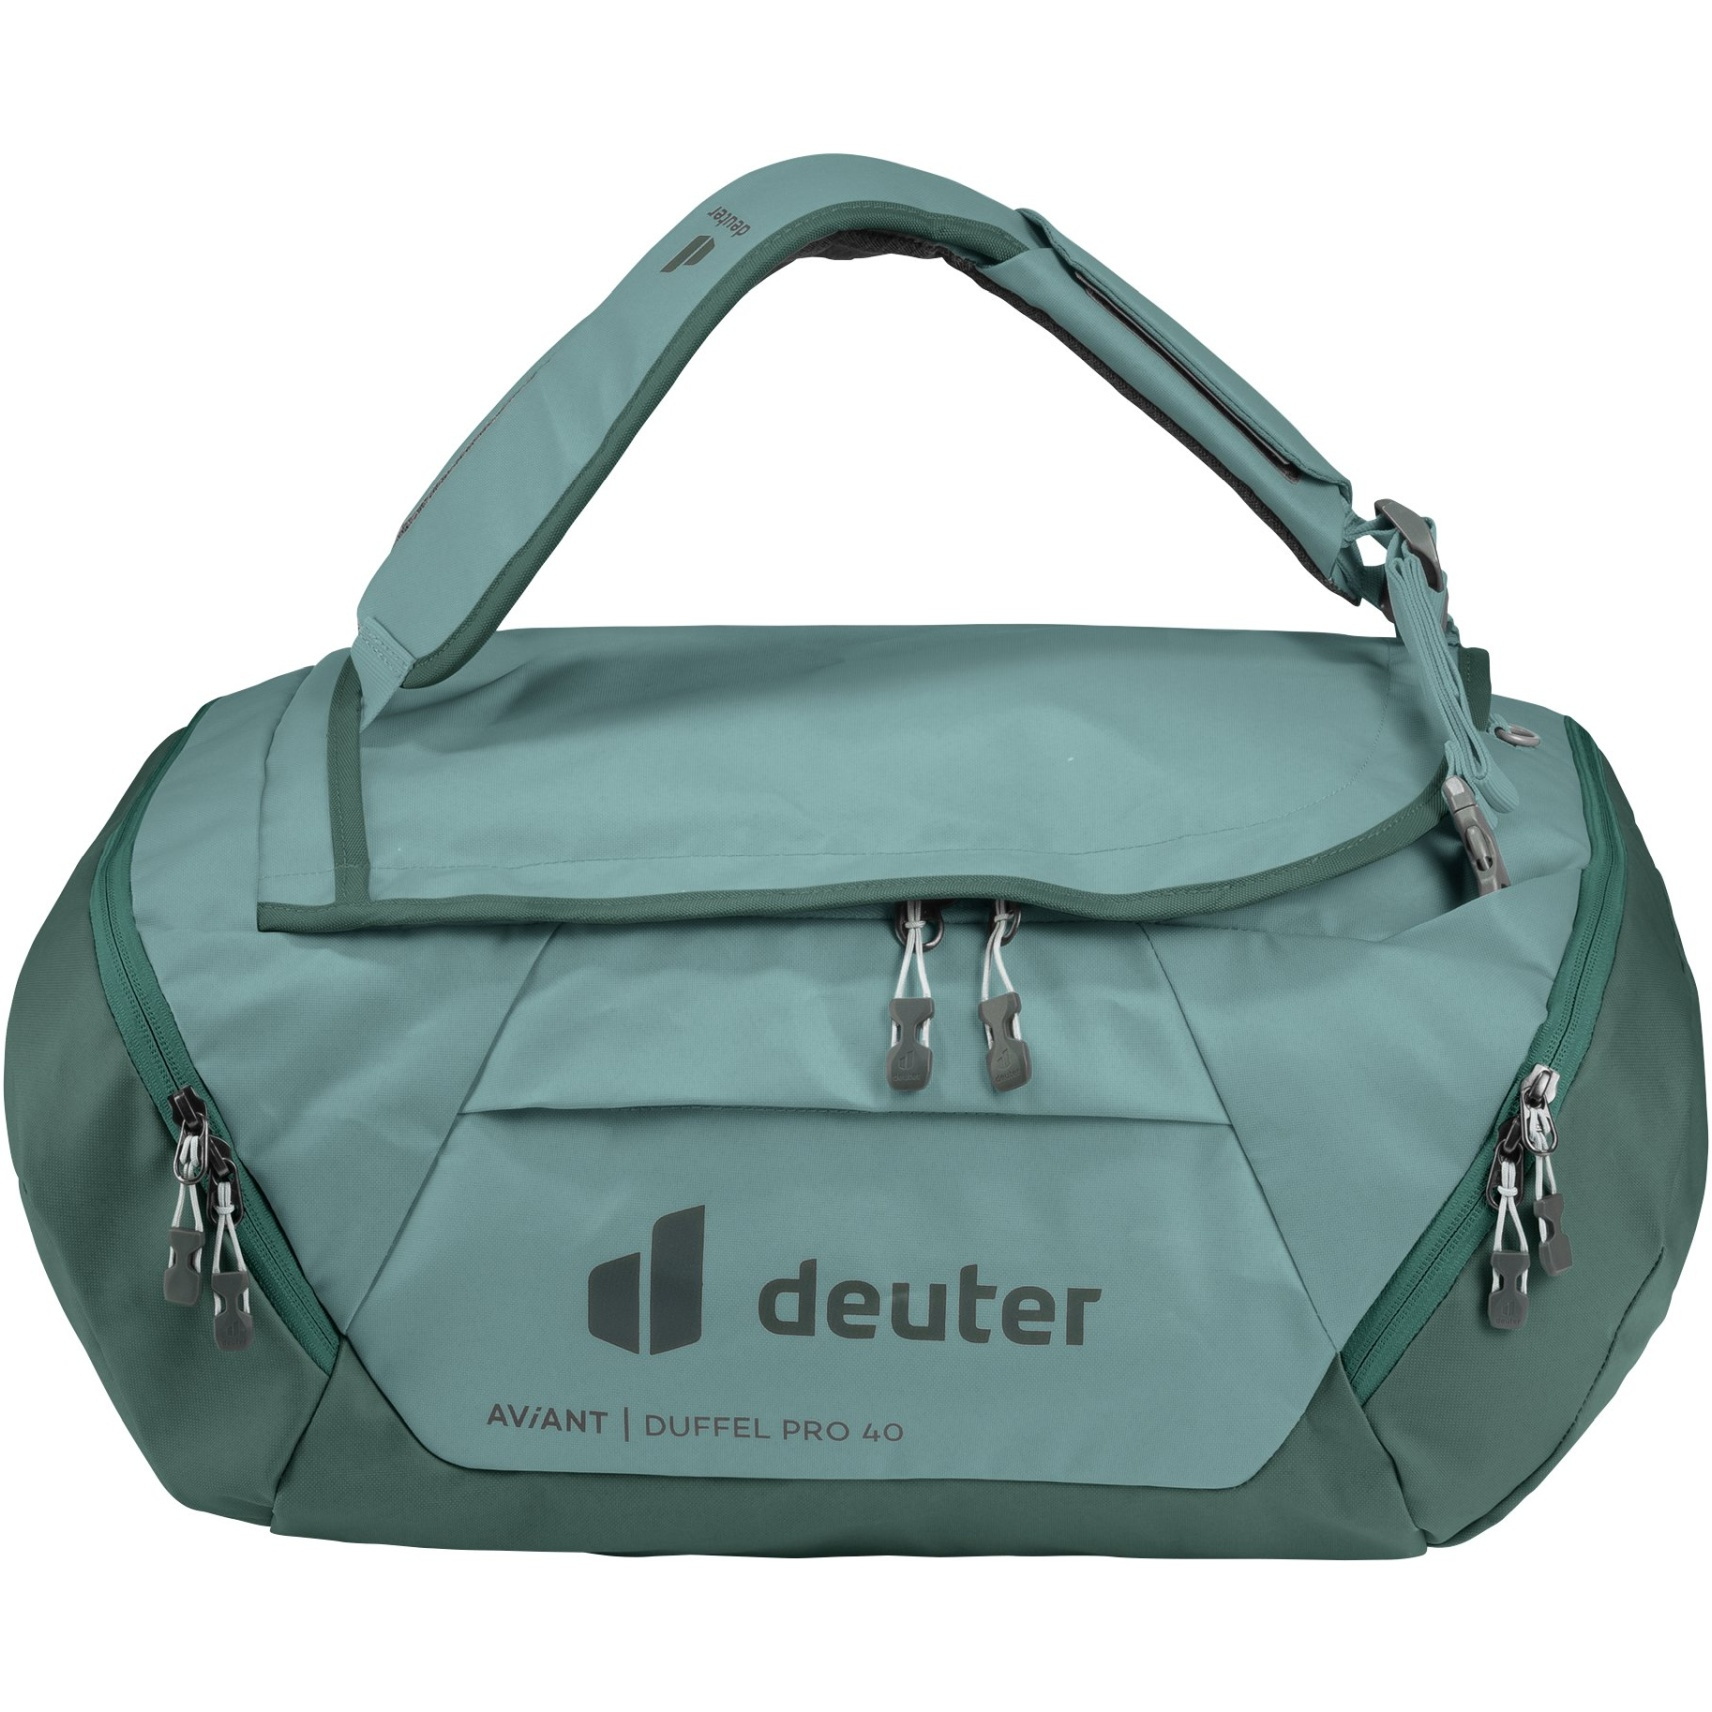 Deuter Reisetasche 40 AViANT - BIKE24 Pro | jade-seagreen Duffel